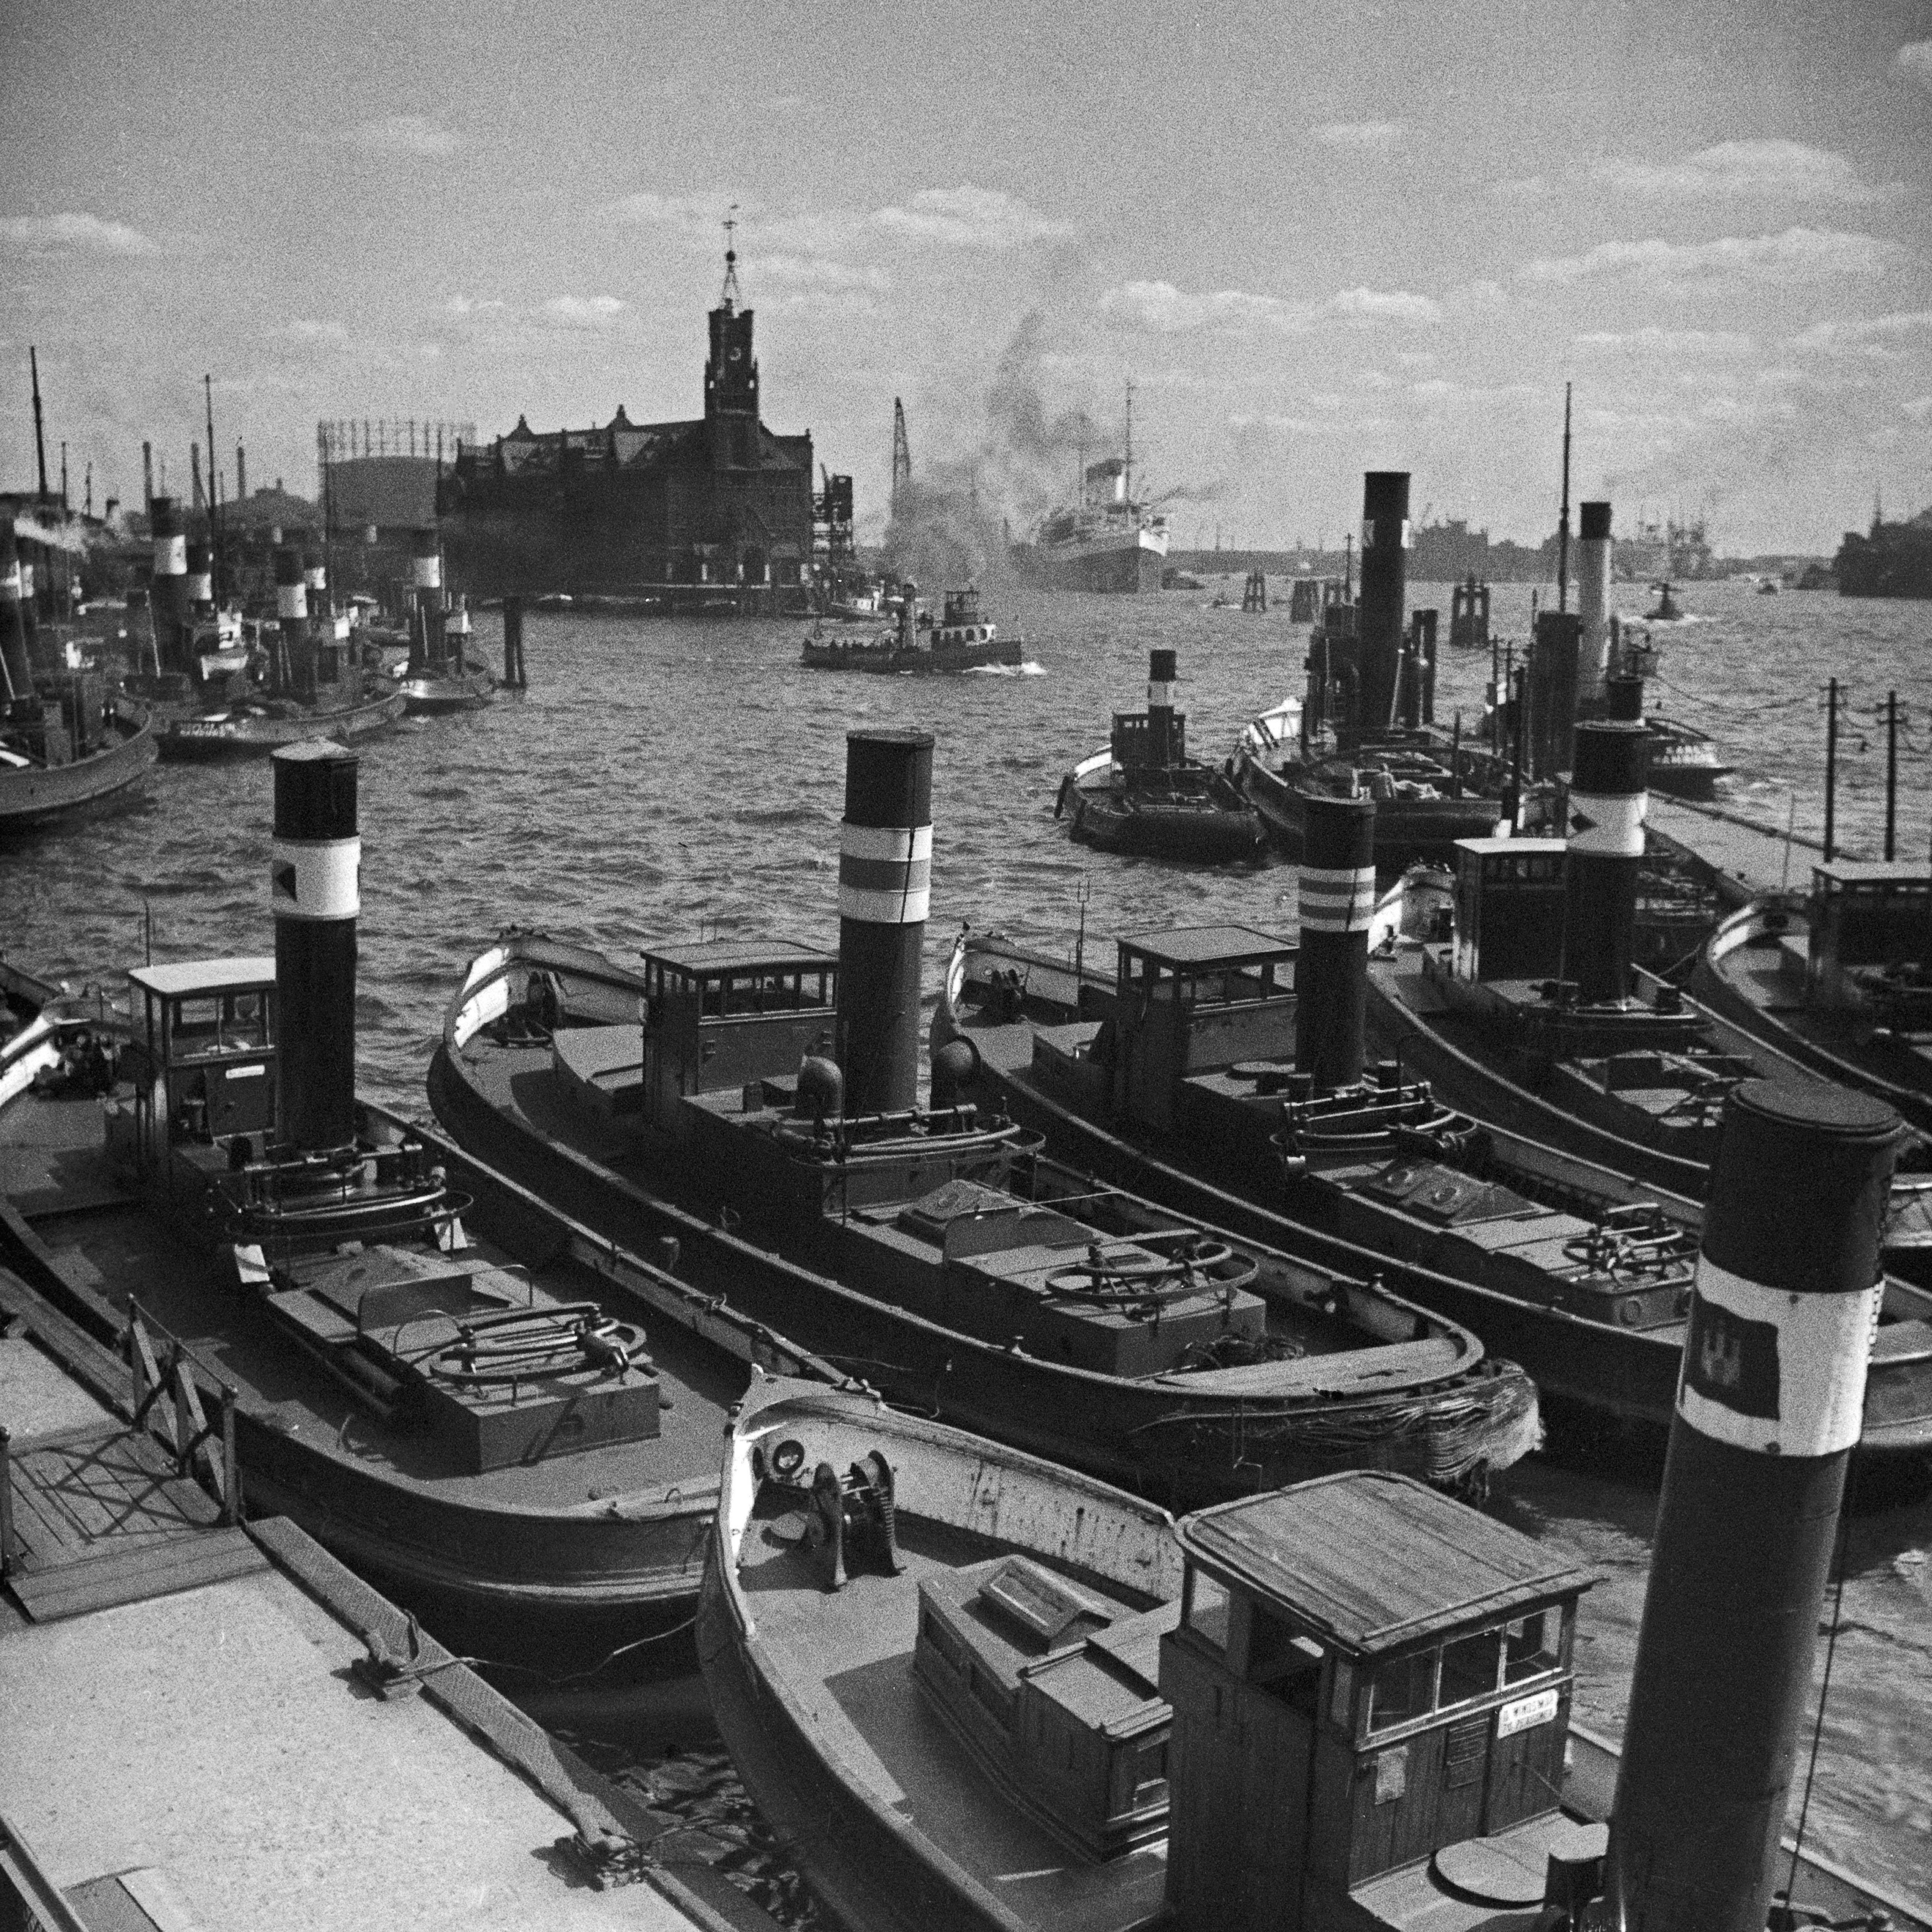 Karl Heinrich Lämmel Black and White Photograph - Ships at Hamburg harbor, Germany 1937, Printed Later 